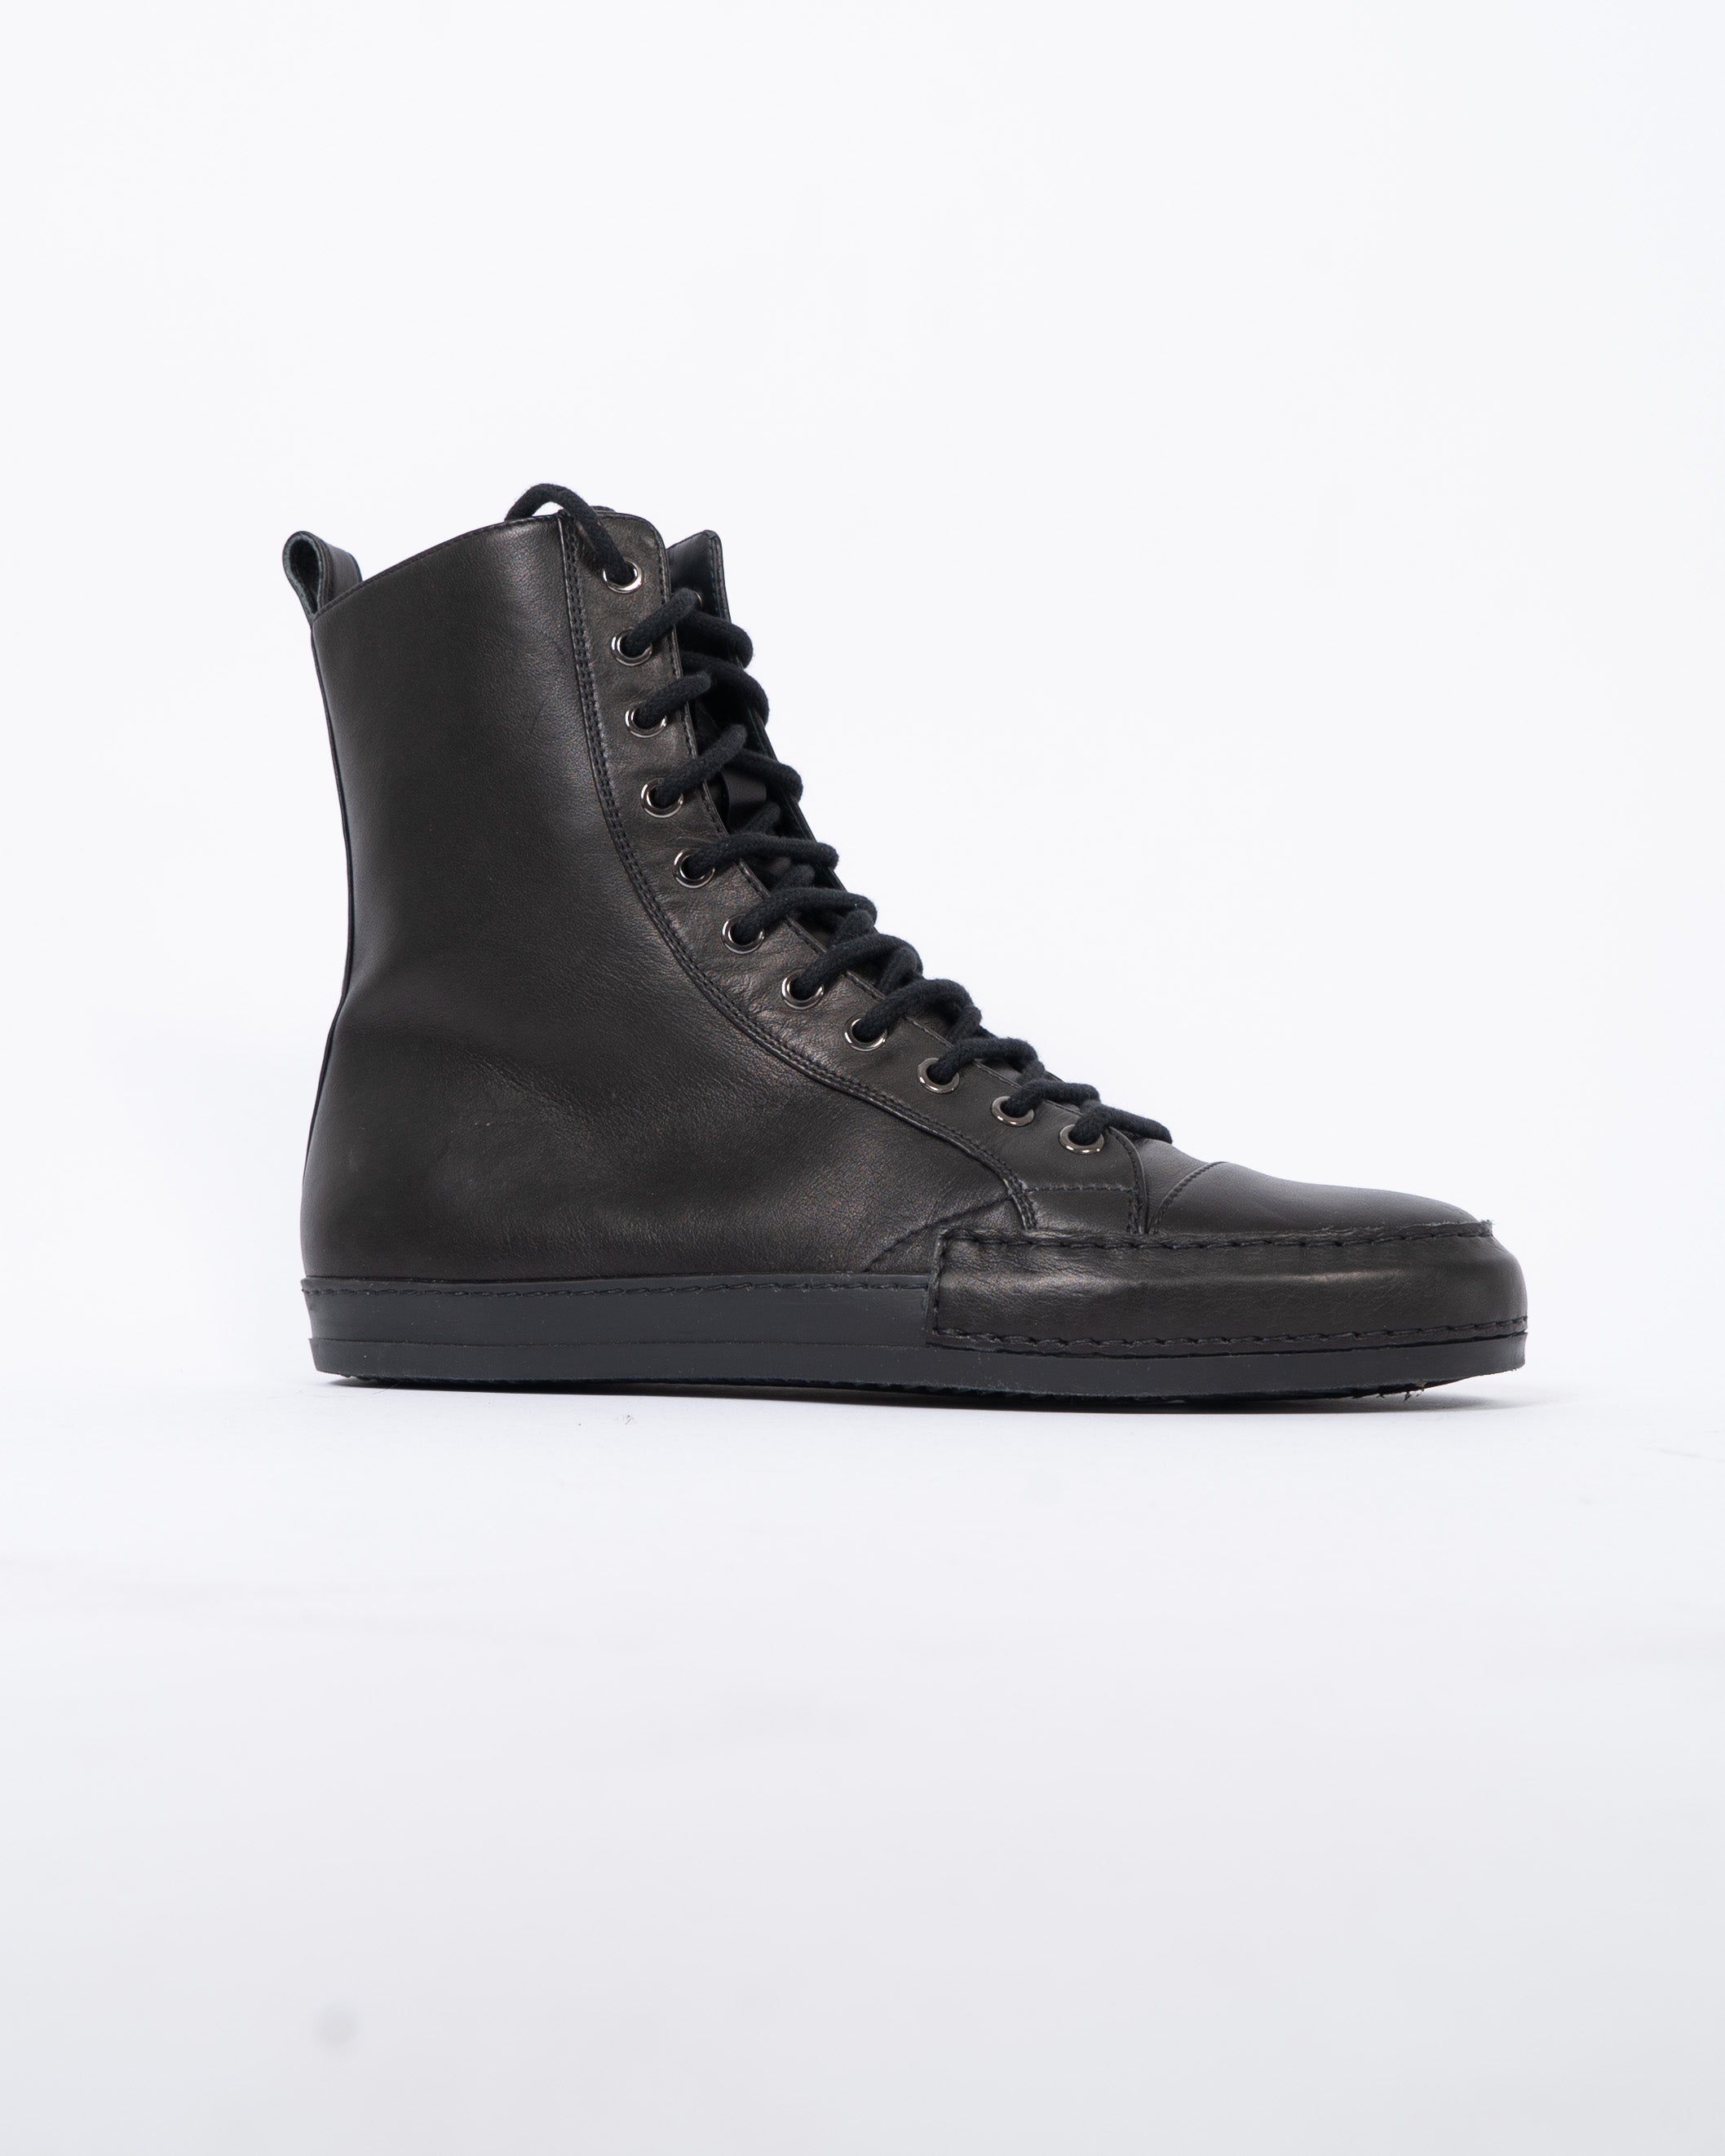 SS17 Black Hightop Leather Sneaker Sample